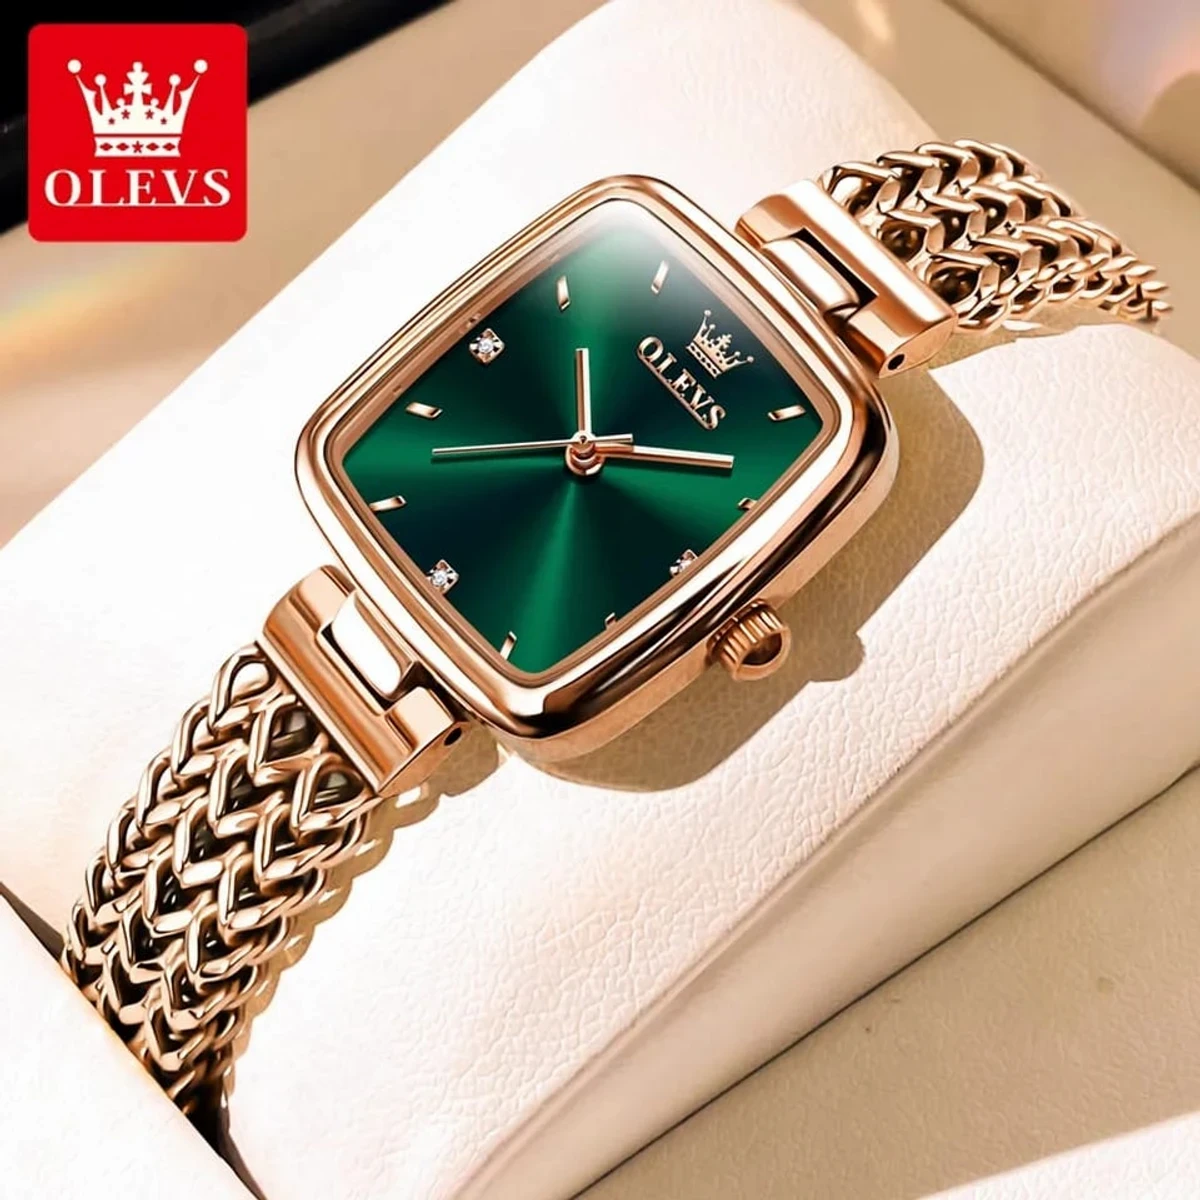 OLEVS WOMEN WATCH MODEL 9951 Square Fashion Ultra-Thin Quartz Watch - COOLER GOLDEN CHAI DIAL BLUE